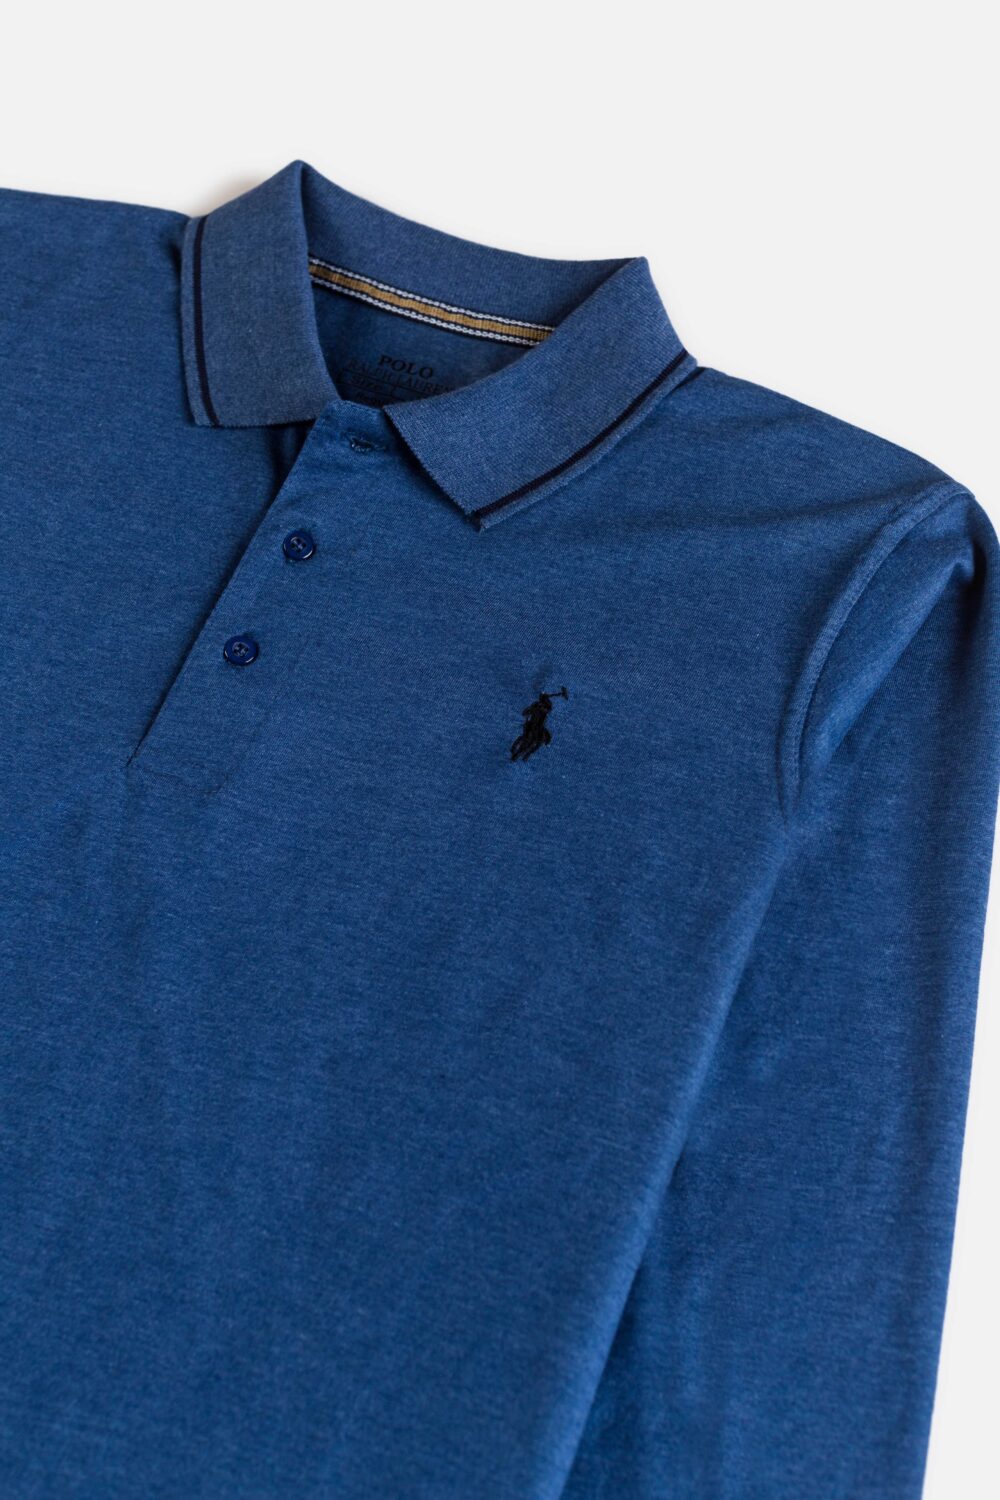 RL Premium Cotton Full Polo – Yale Blue